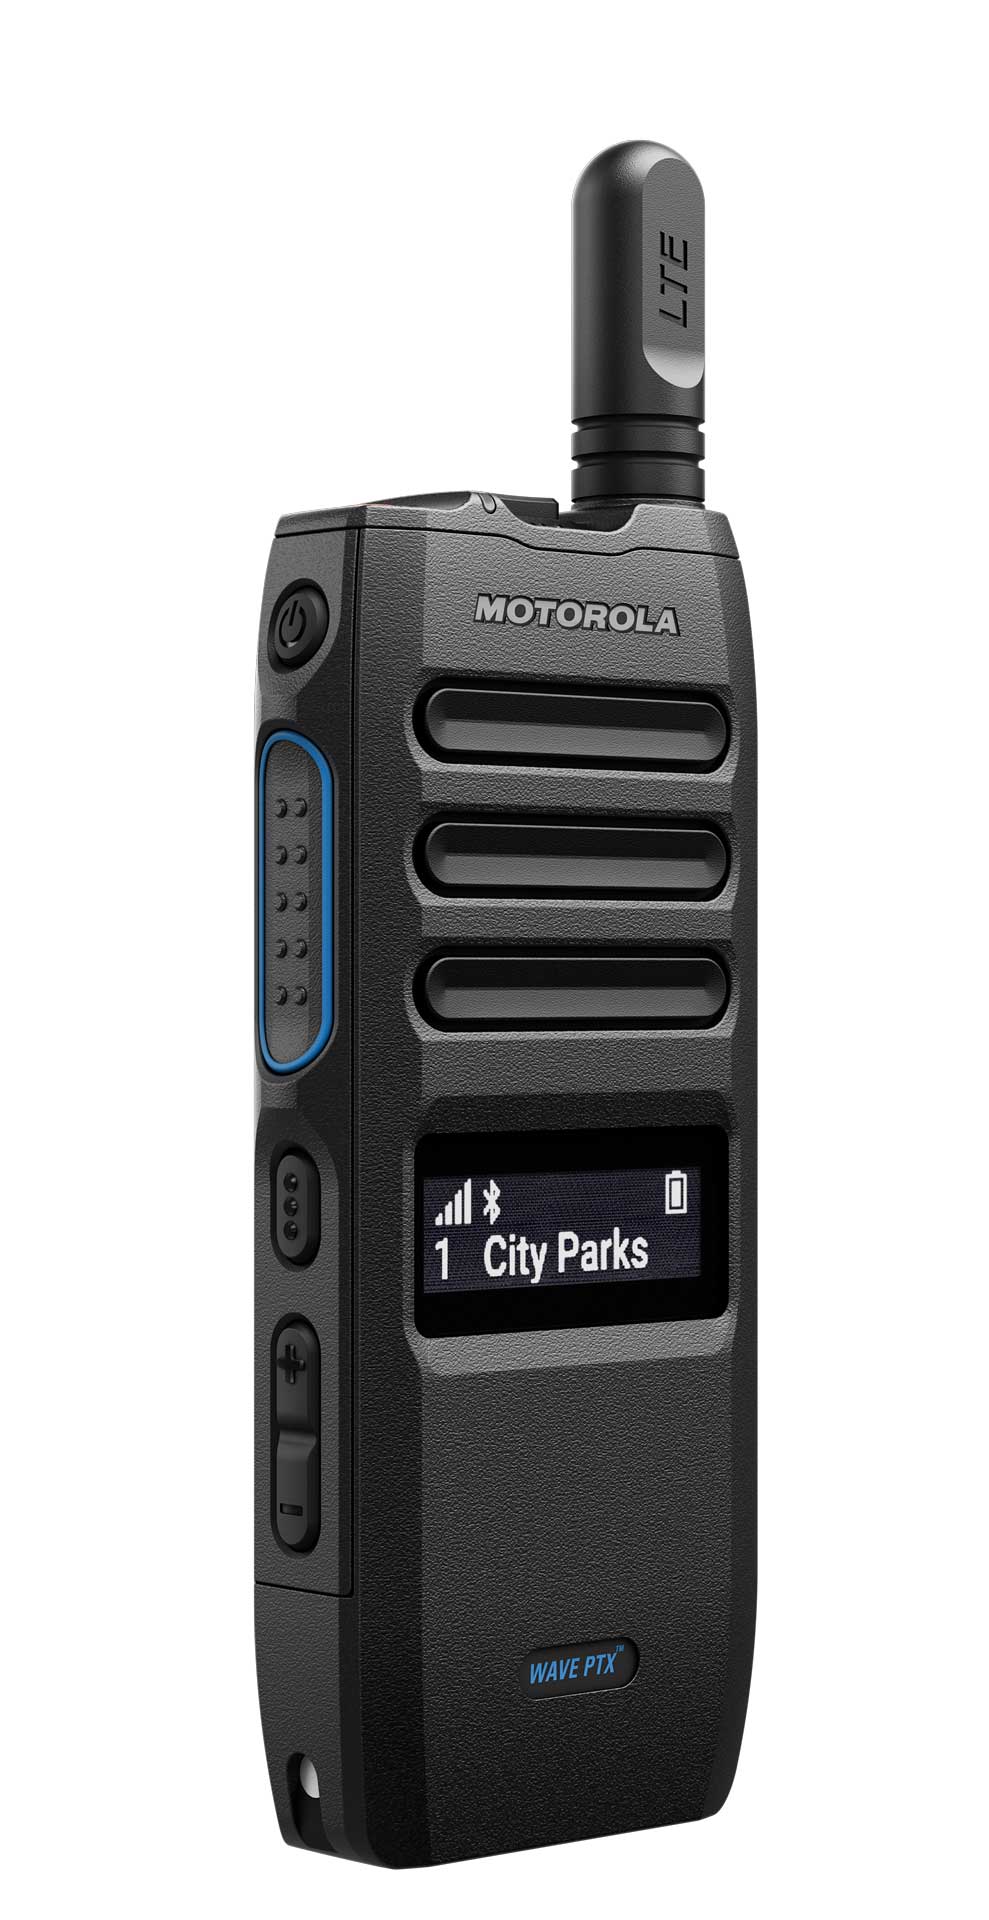 Motorola WAVE PTX radio TLK110 Charger Battery Antenne HK2189A no SIM